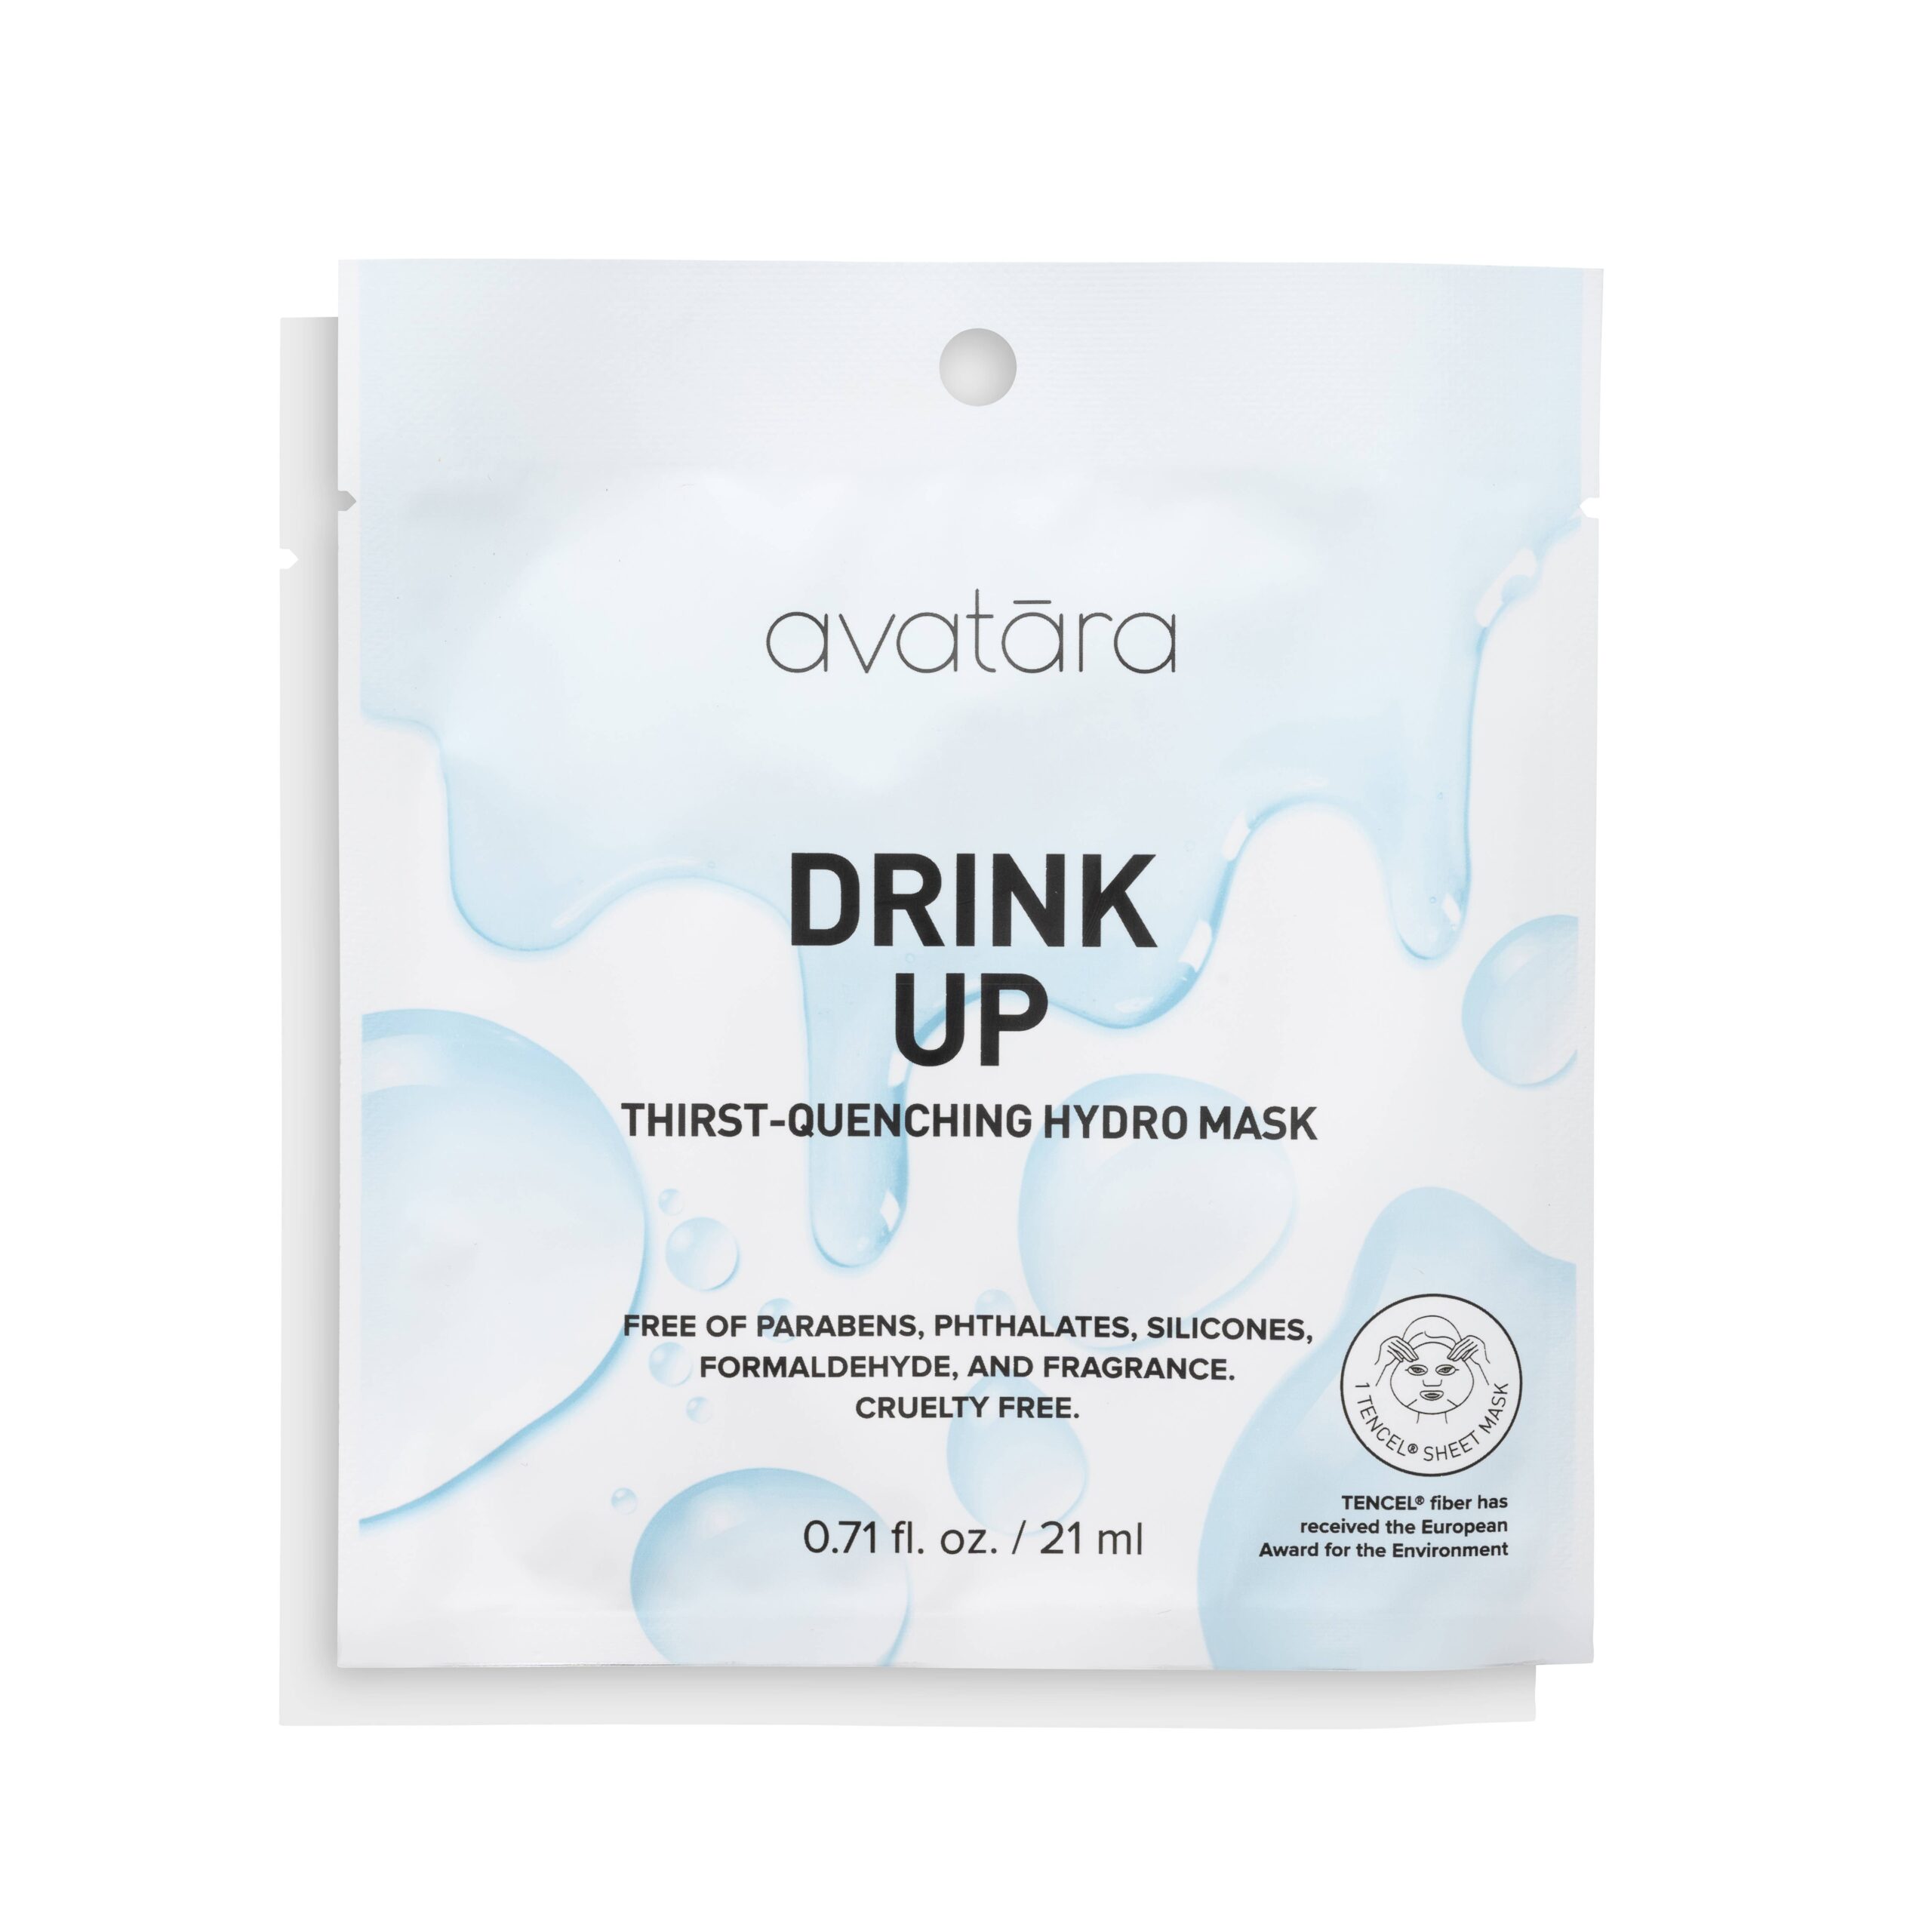 avatara drink up face mask